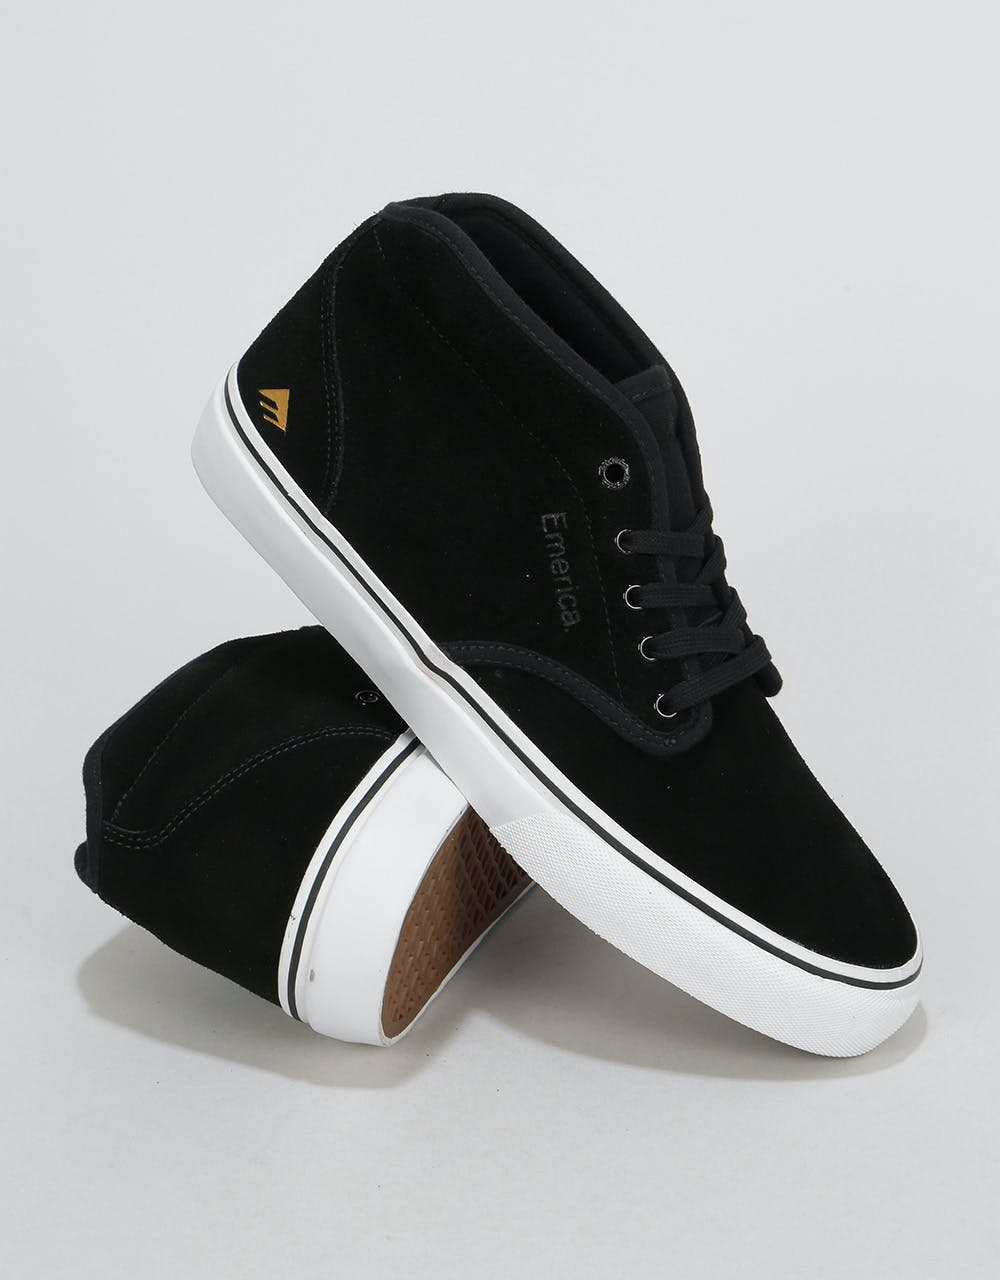 Emerica Wino G6 Mid Skate Shoes - Black/White/Gold